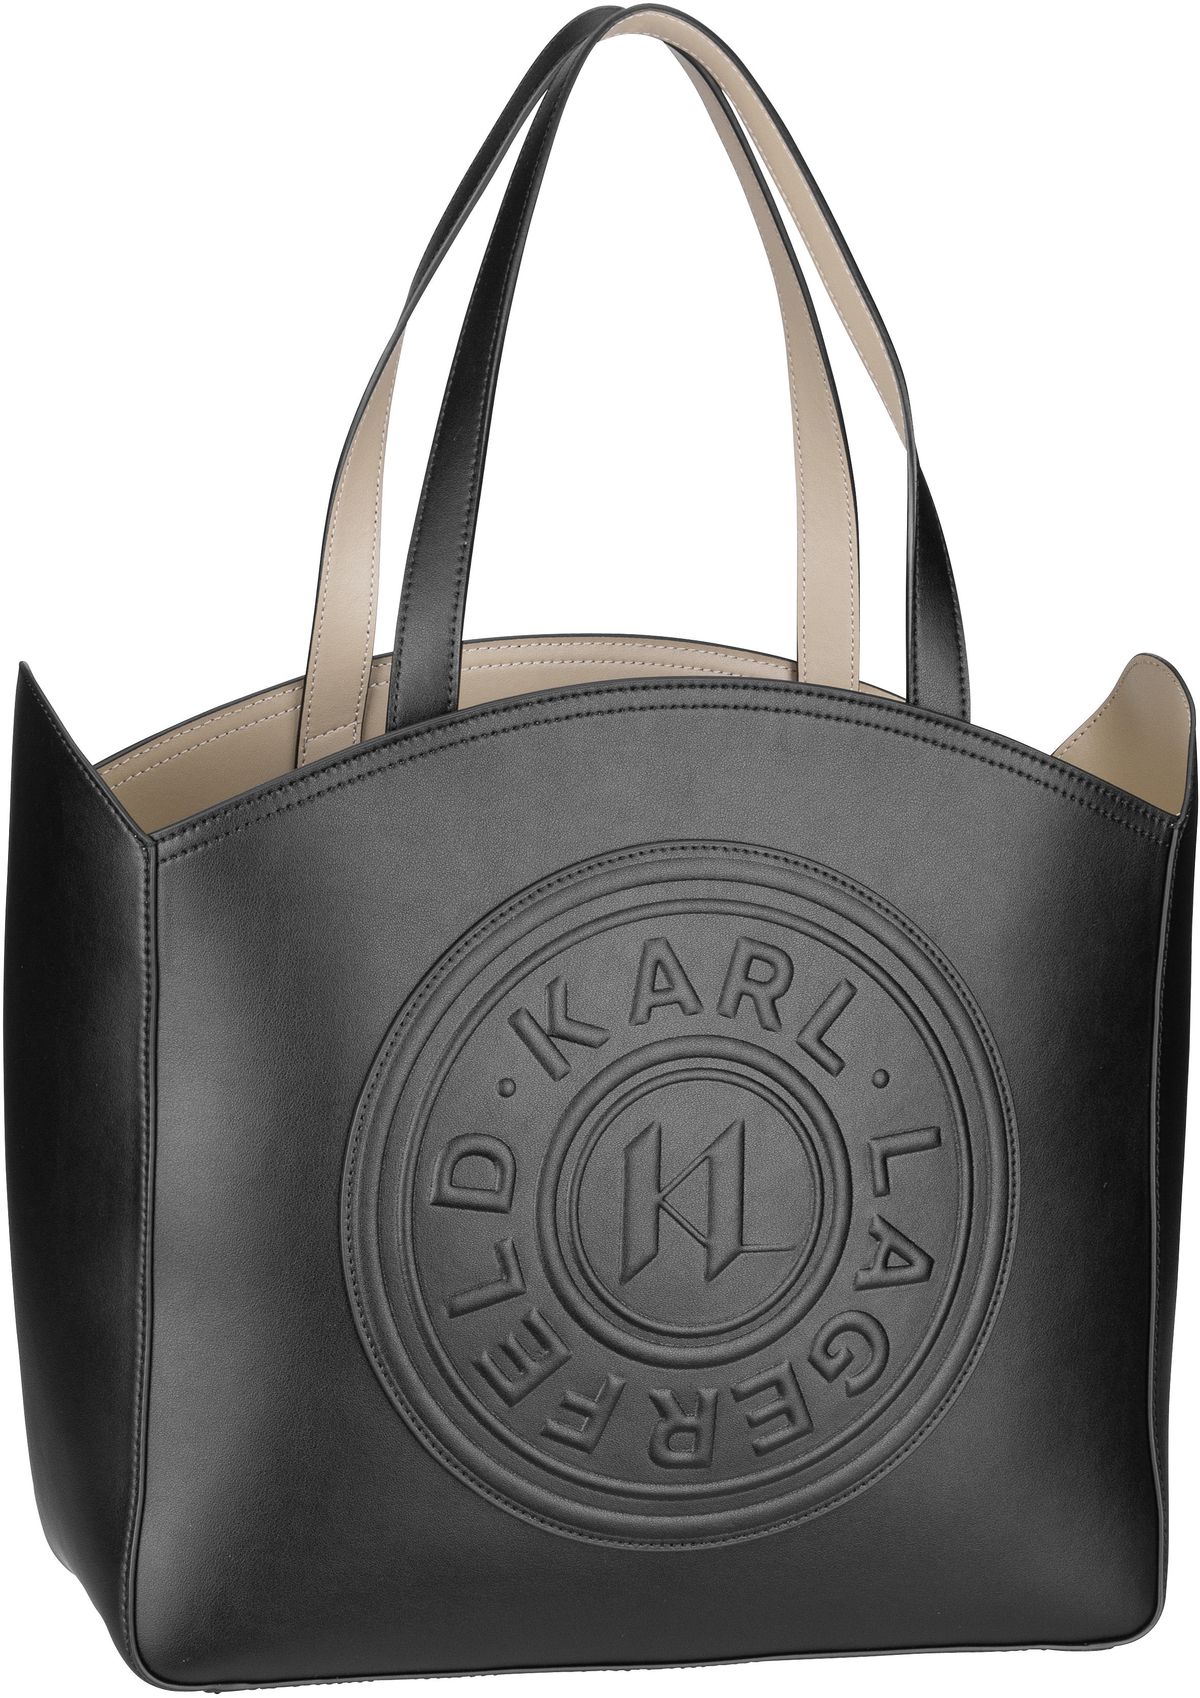 Karl Lagerfeld K/Circle LG Tote Patch  in Black (21.2 Liter), Shopper